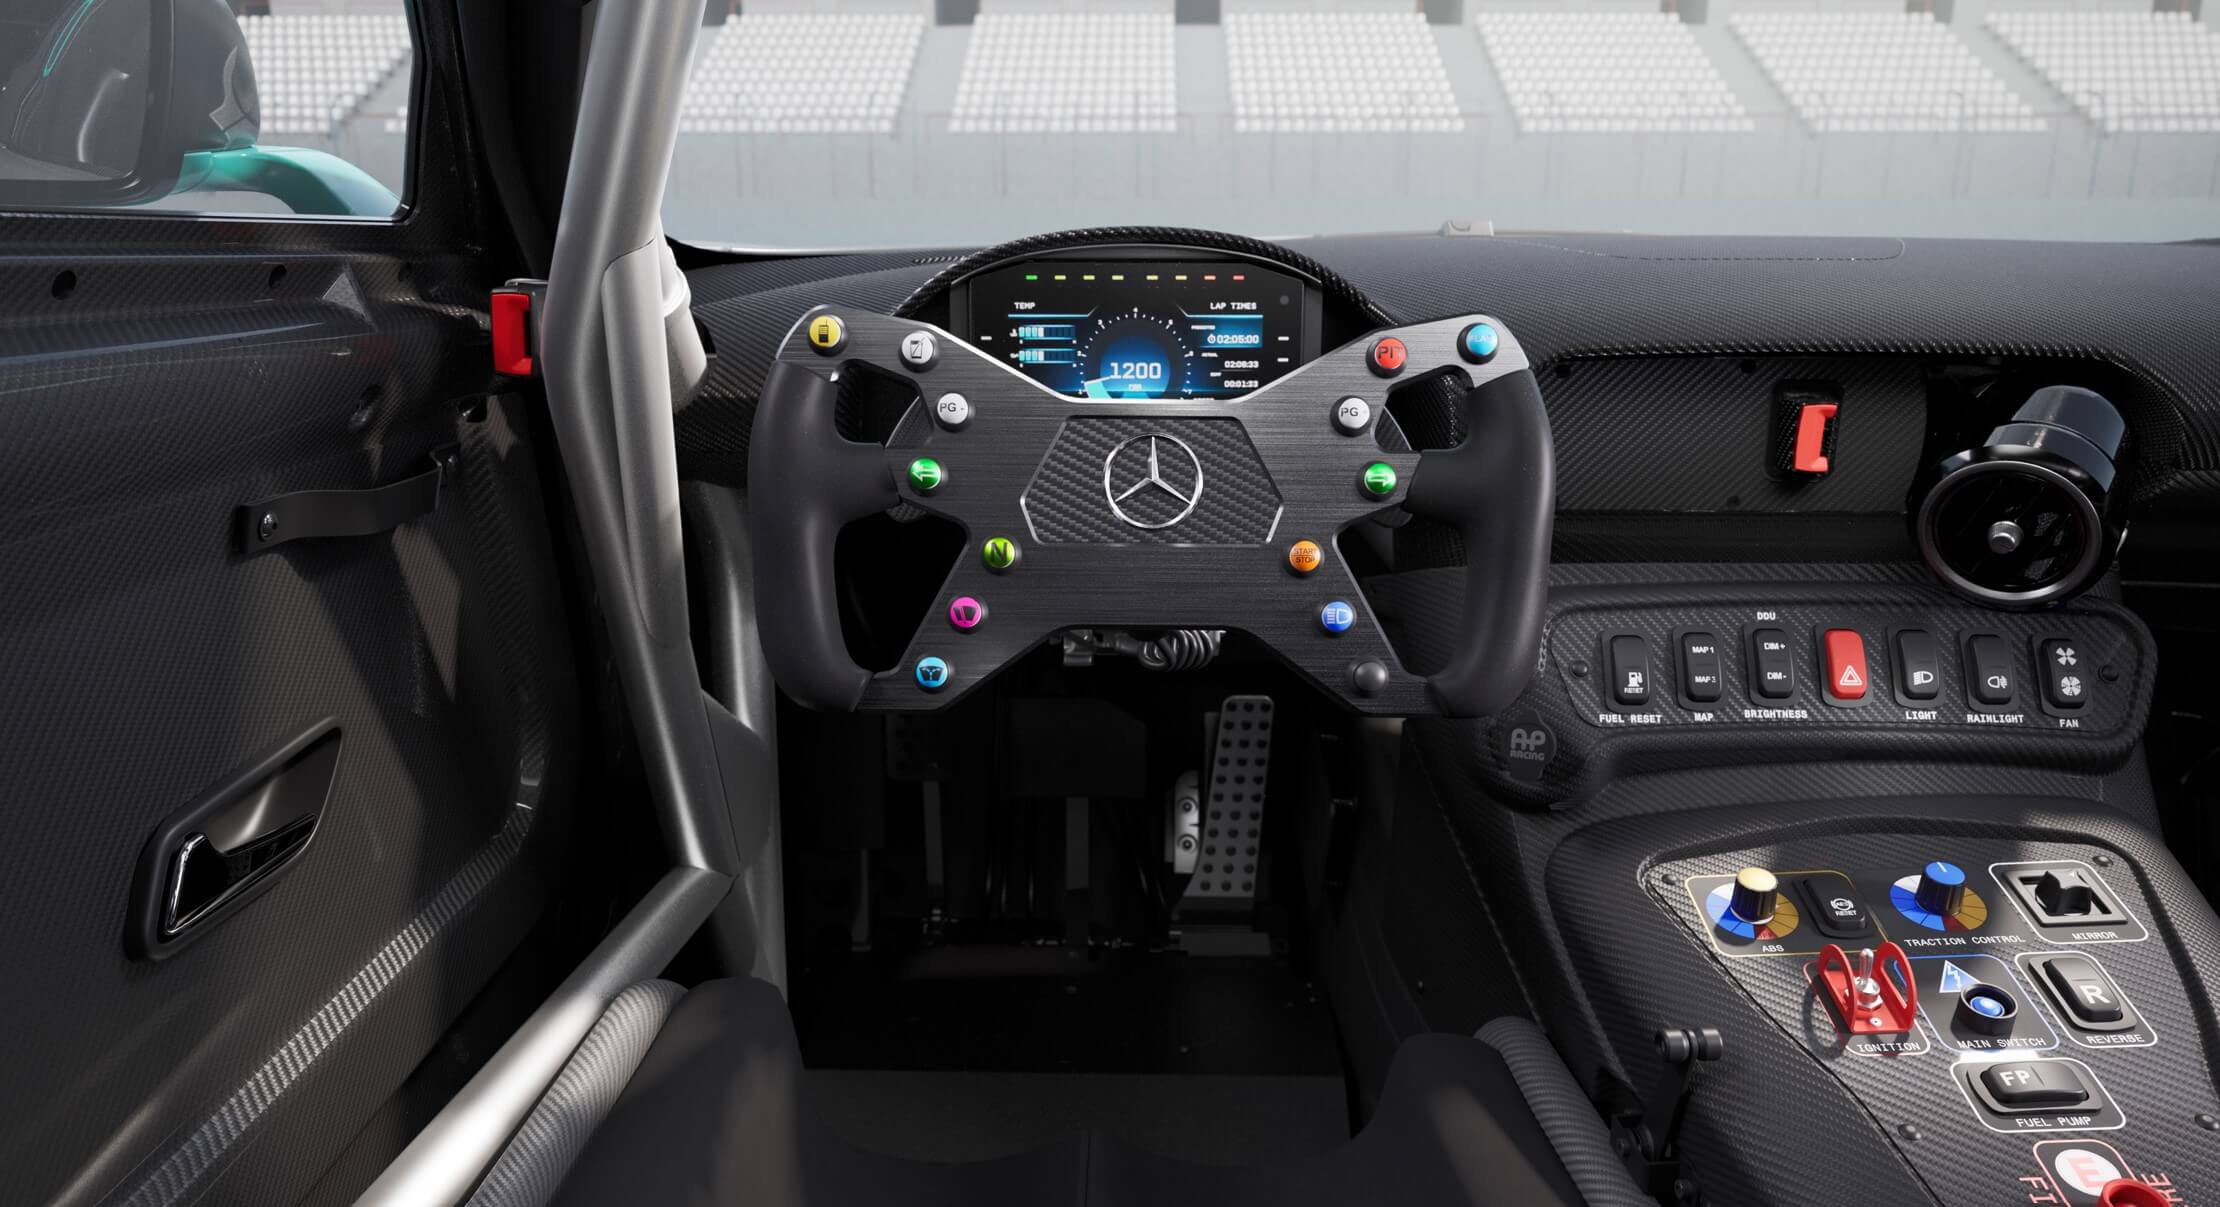 aria-label="Mercedes AMG GT2 2"